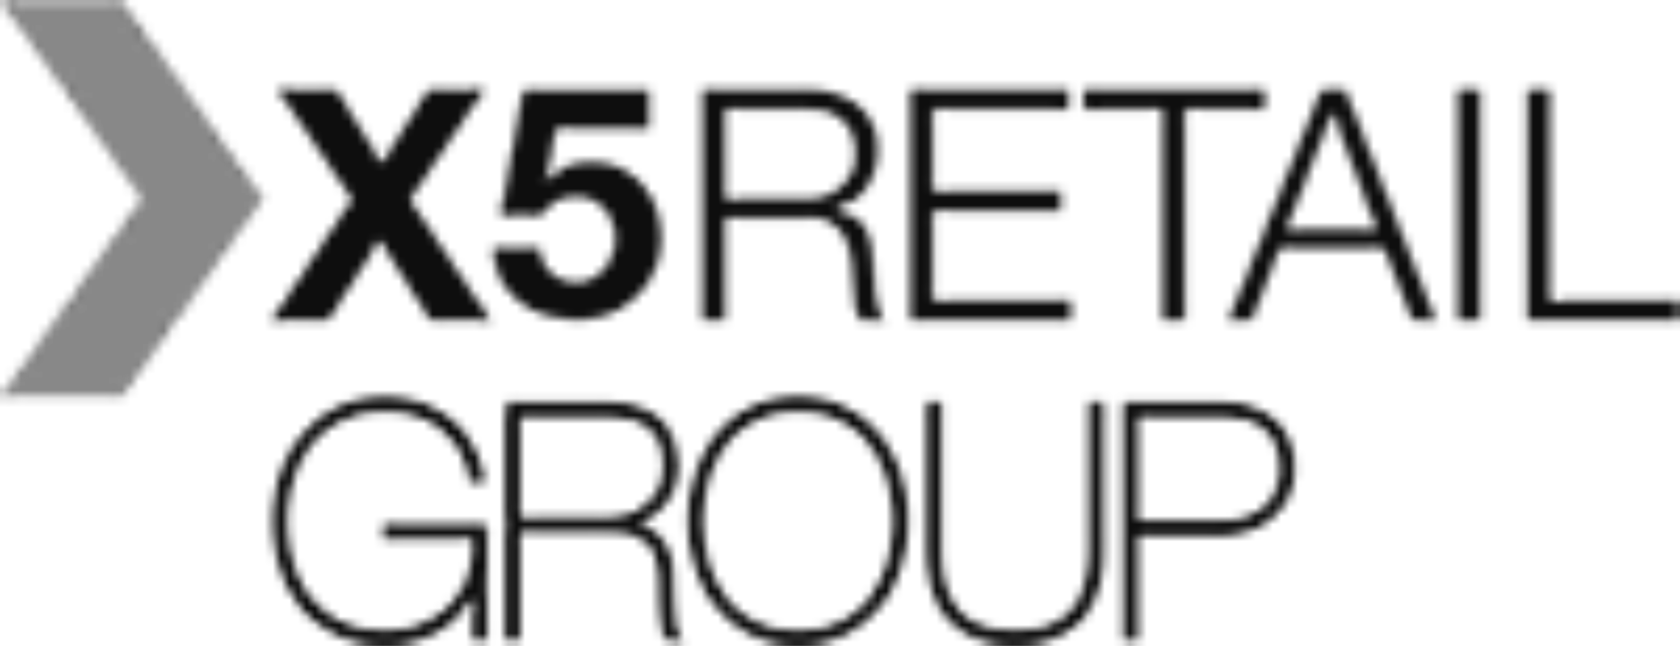 T me ftid group. X5 Retail Group logo. Х5 Ритейл групп логотип. X5 Retail лого. X5 Retail Group лого.